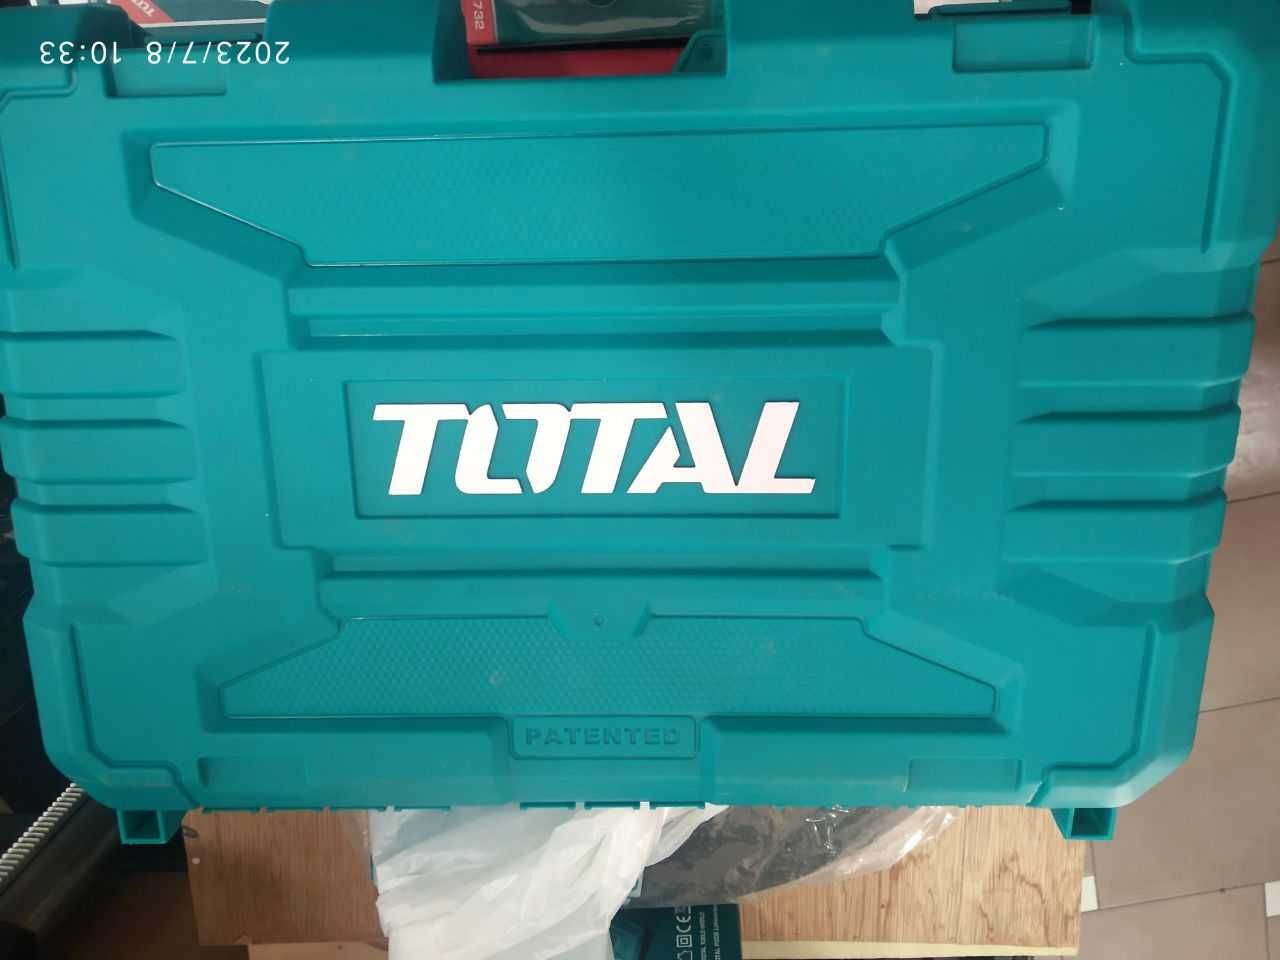 Комплект TOTAL инструменты (аккумуляторные)